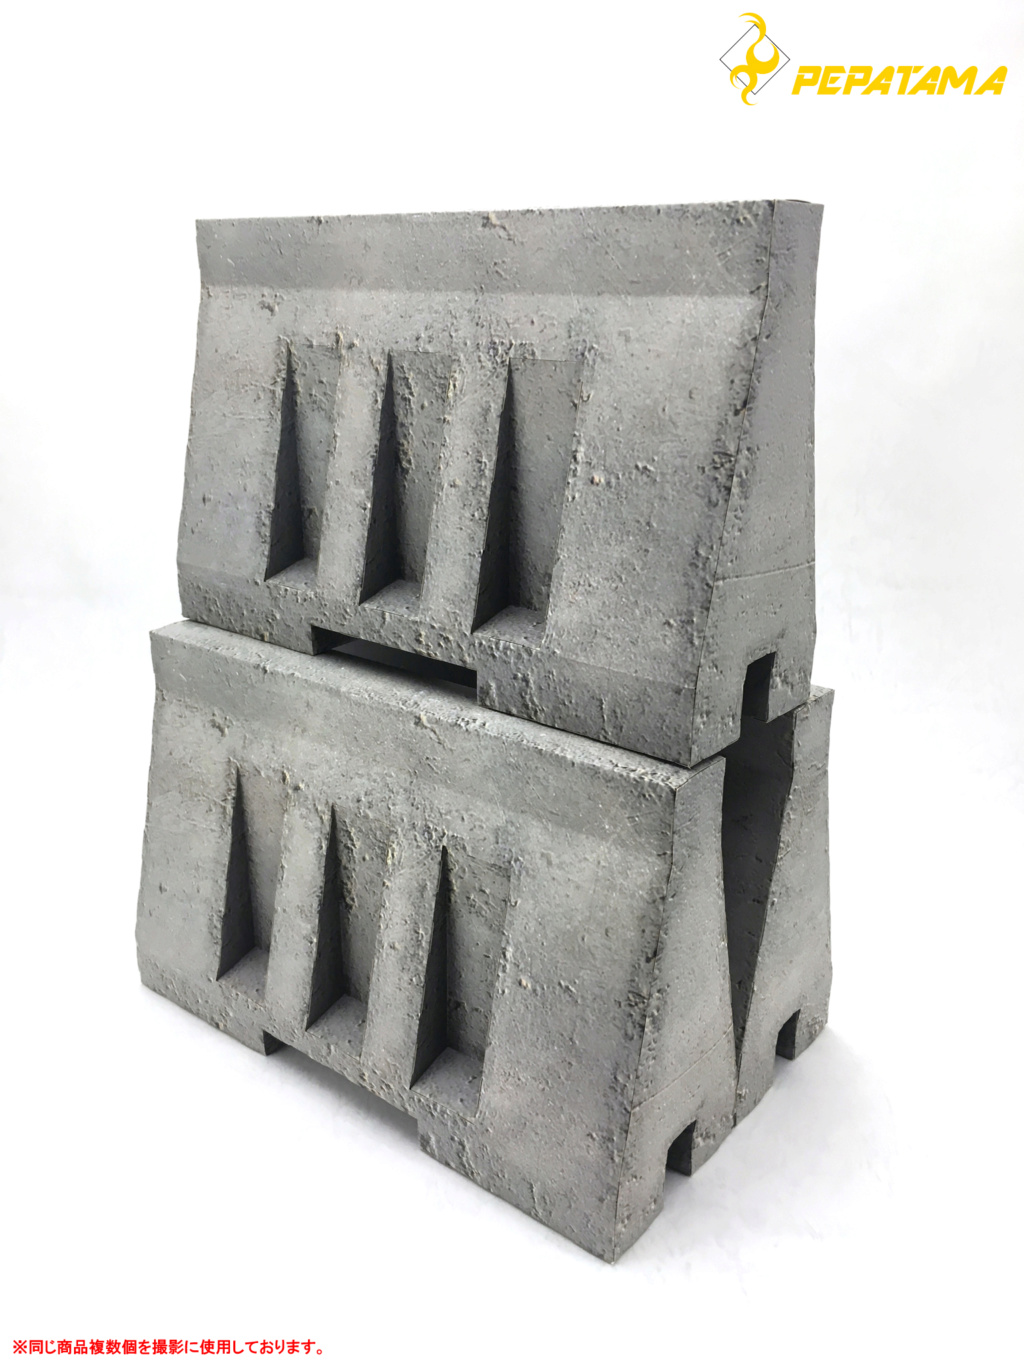 PaperDiorama - NEW PRODUCT: PEPATAMA: 1/6 PAPER- DIORAMA Series Scene Props Paper Model - Oil Barrel & Cement Barrier 19585910